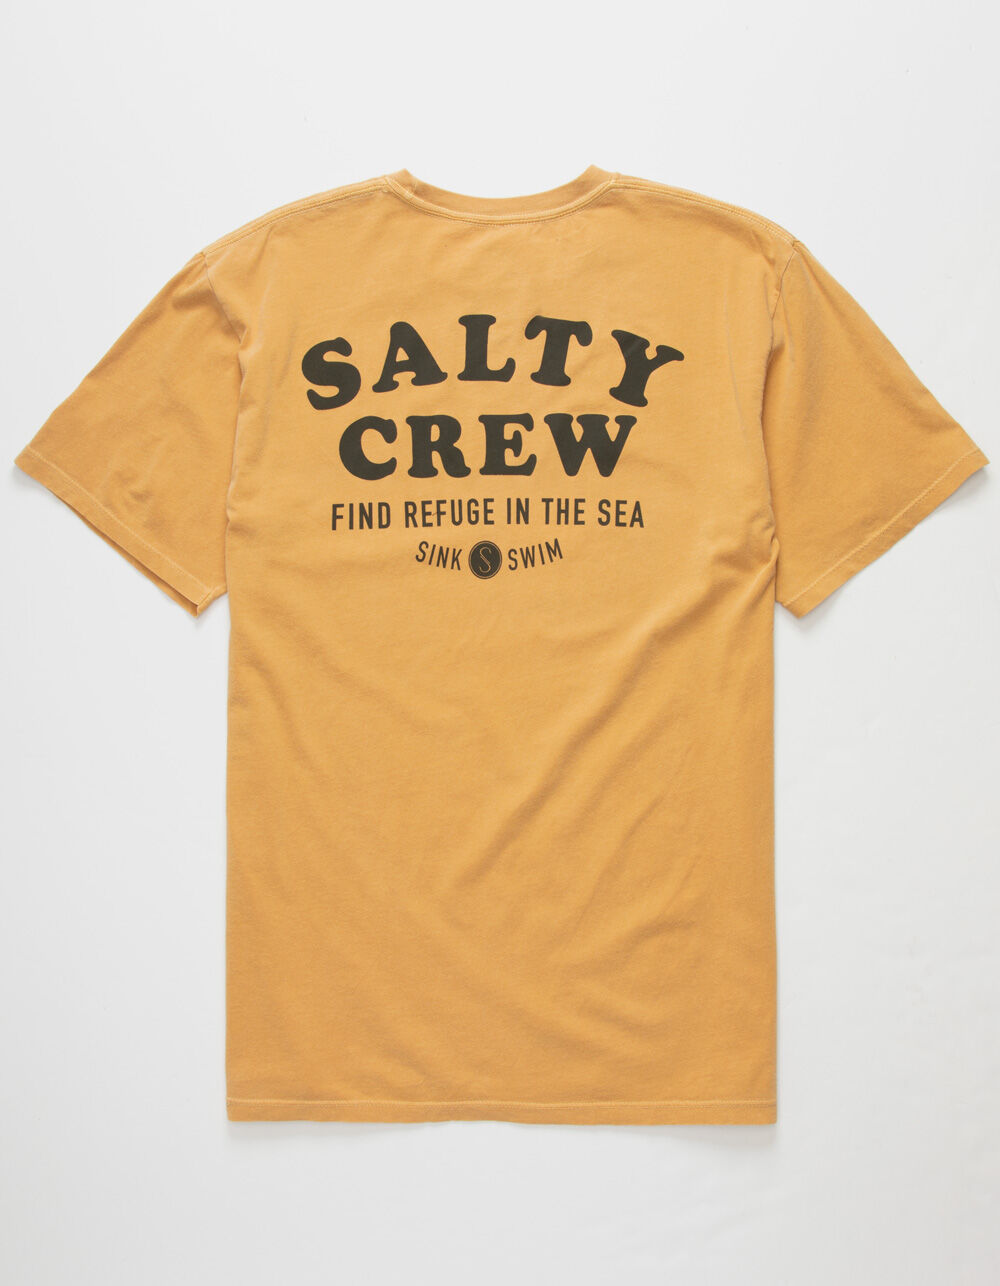 SALTY CREW Inlet Overdyed Mens Gold T-Shirt - GOLD | Tillys